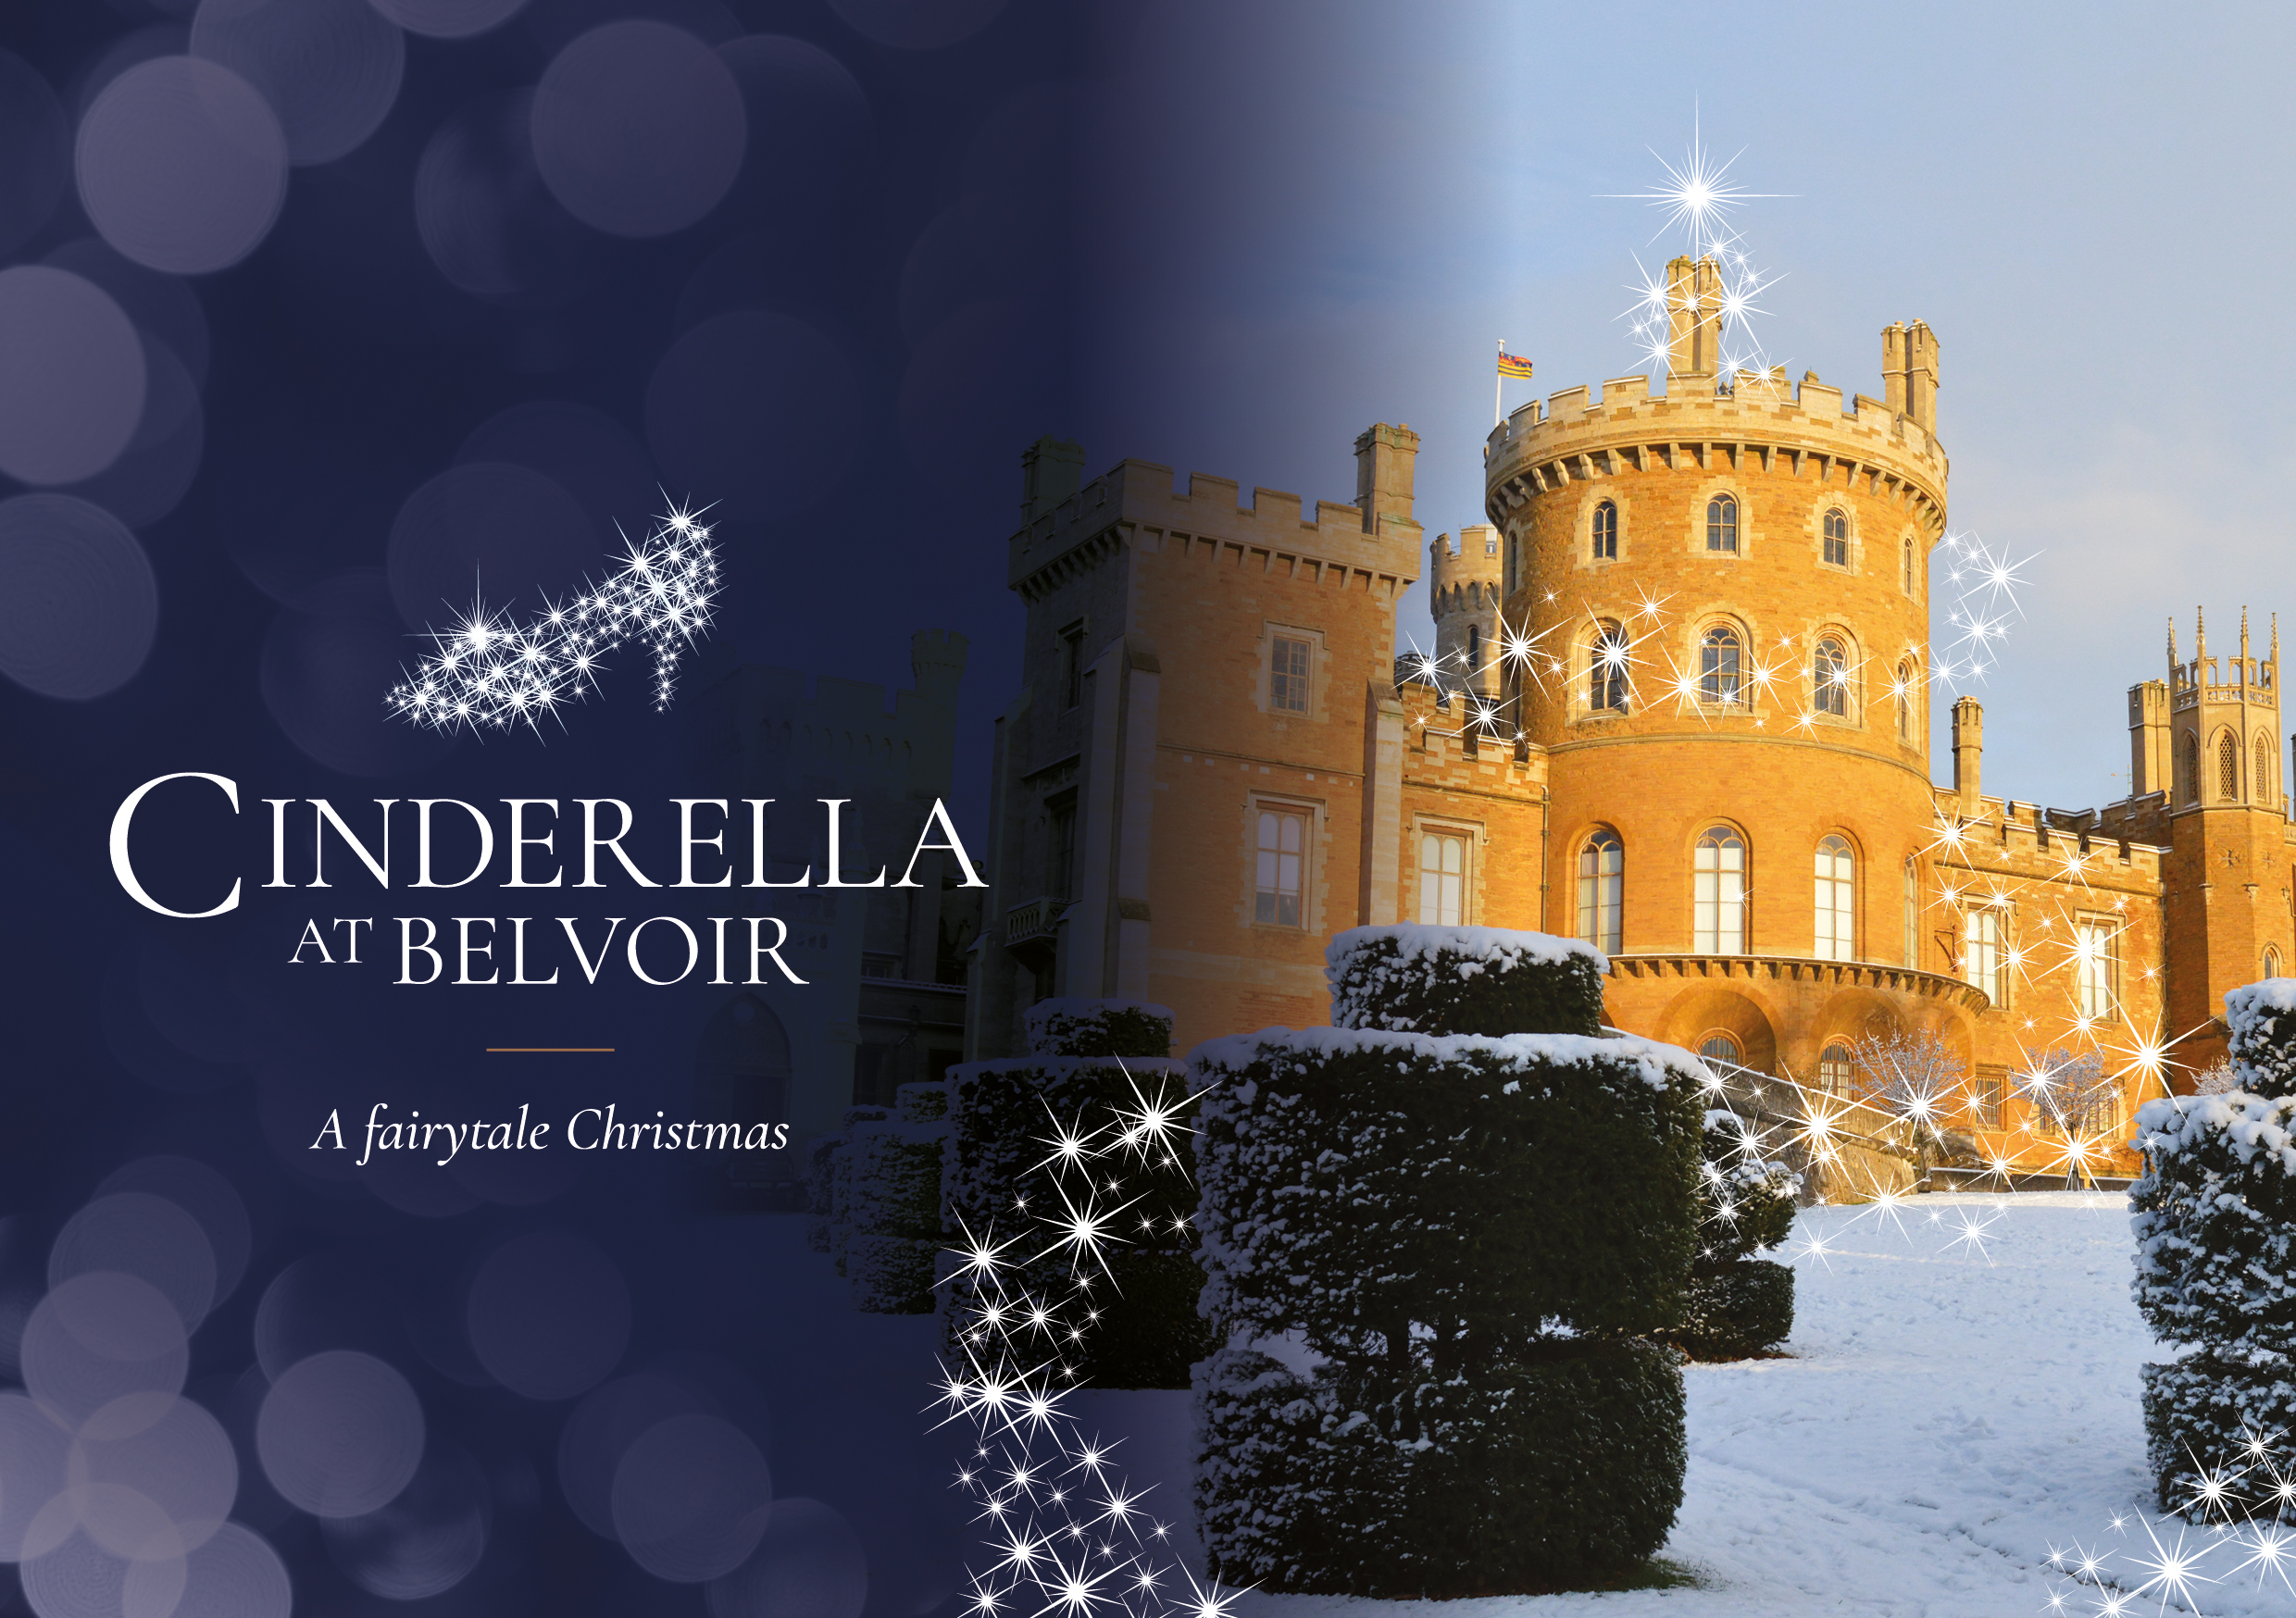 Cinderella at Belvoir - a fairytale Christmas